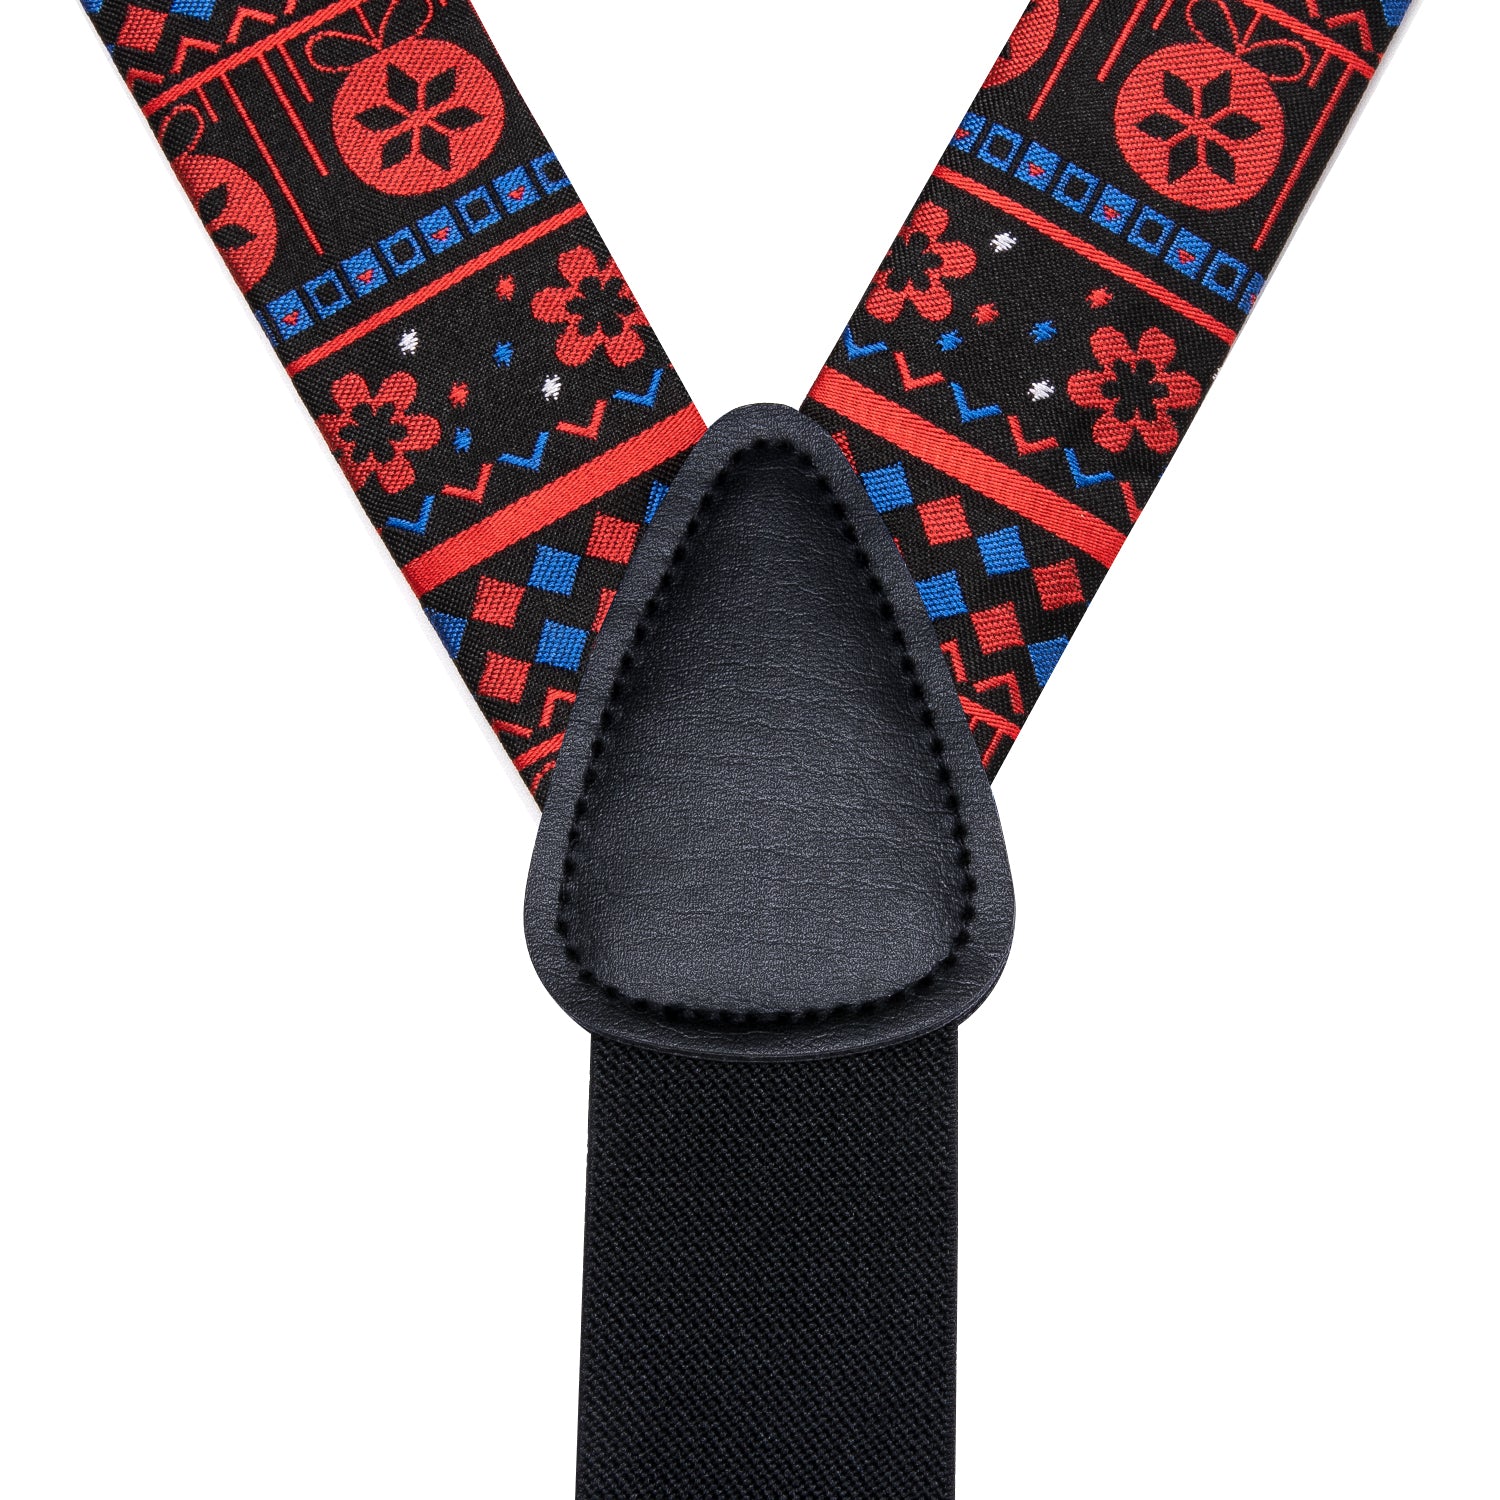 Christmas Red Black Novelty Suspender Bowtie Hanky Cufflinks Set